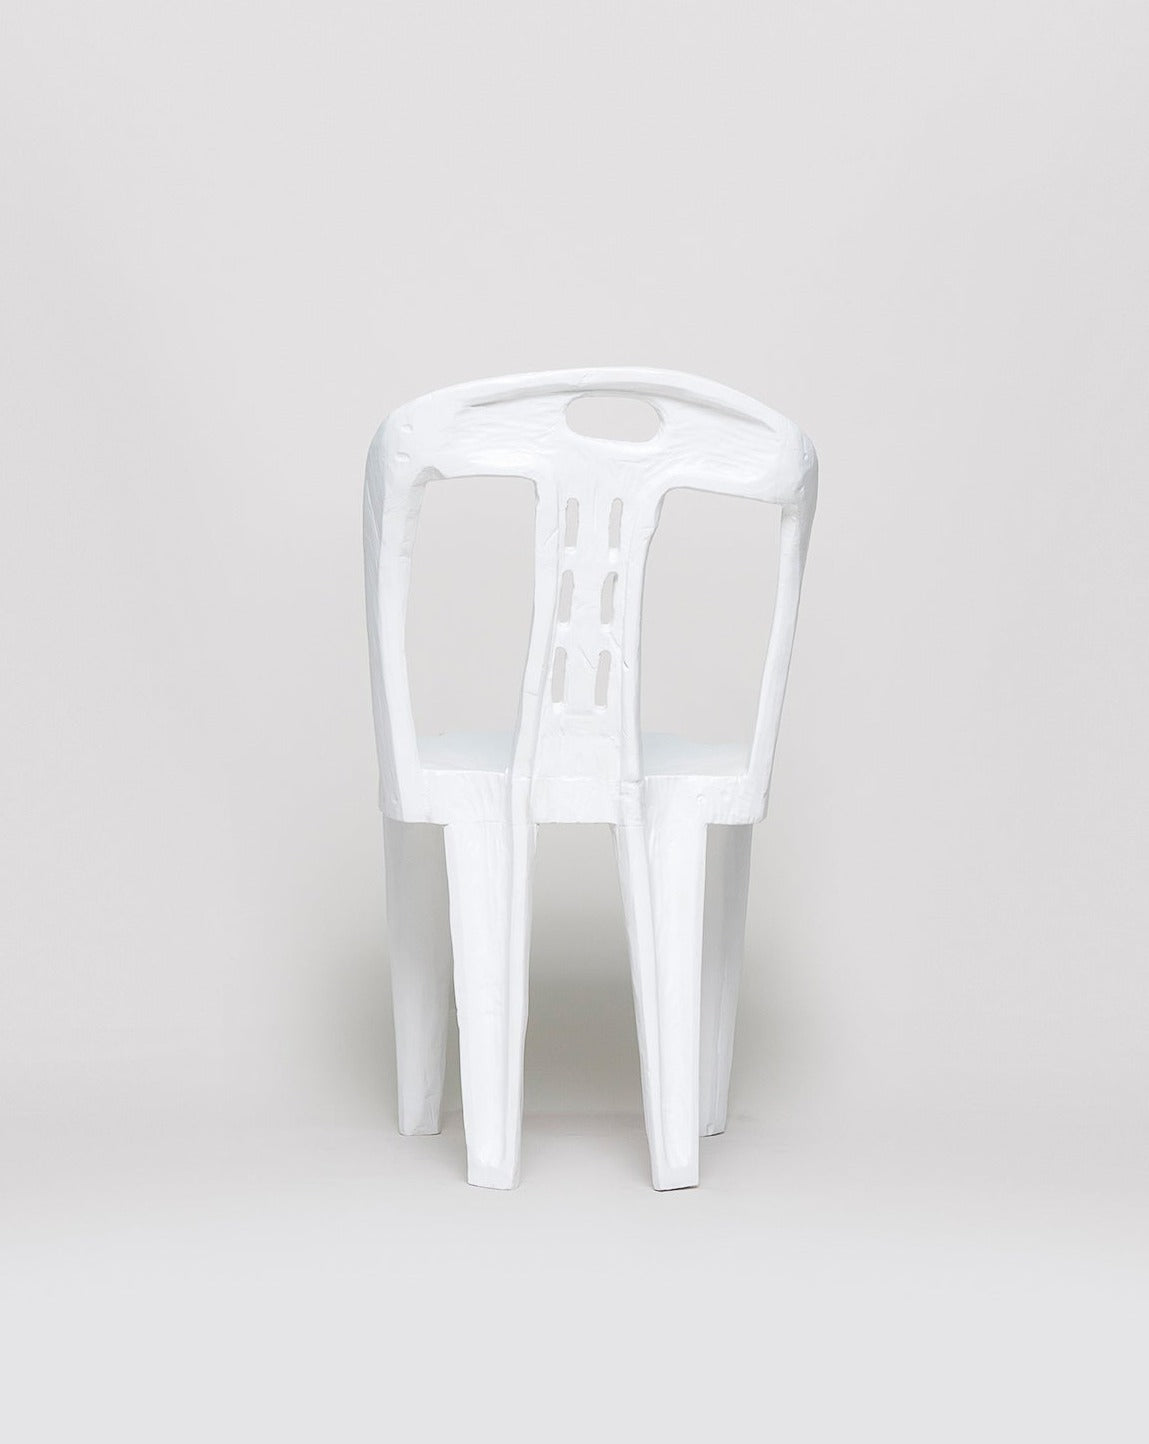 Everyday People (White Chair) 2022 - kombi